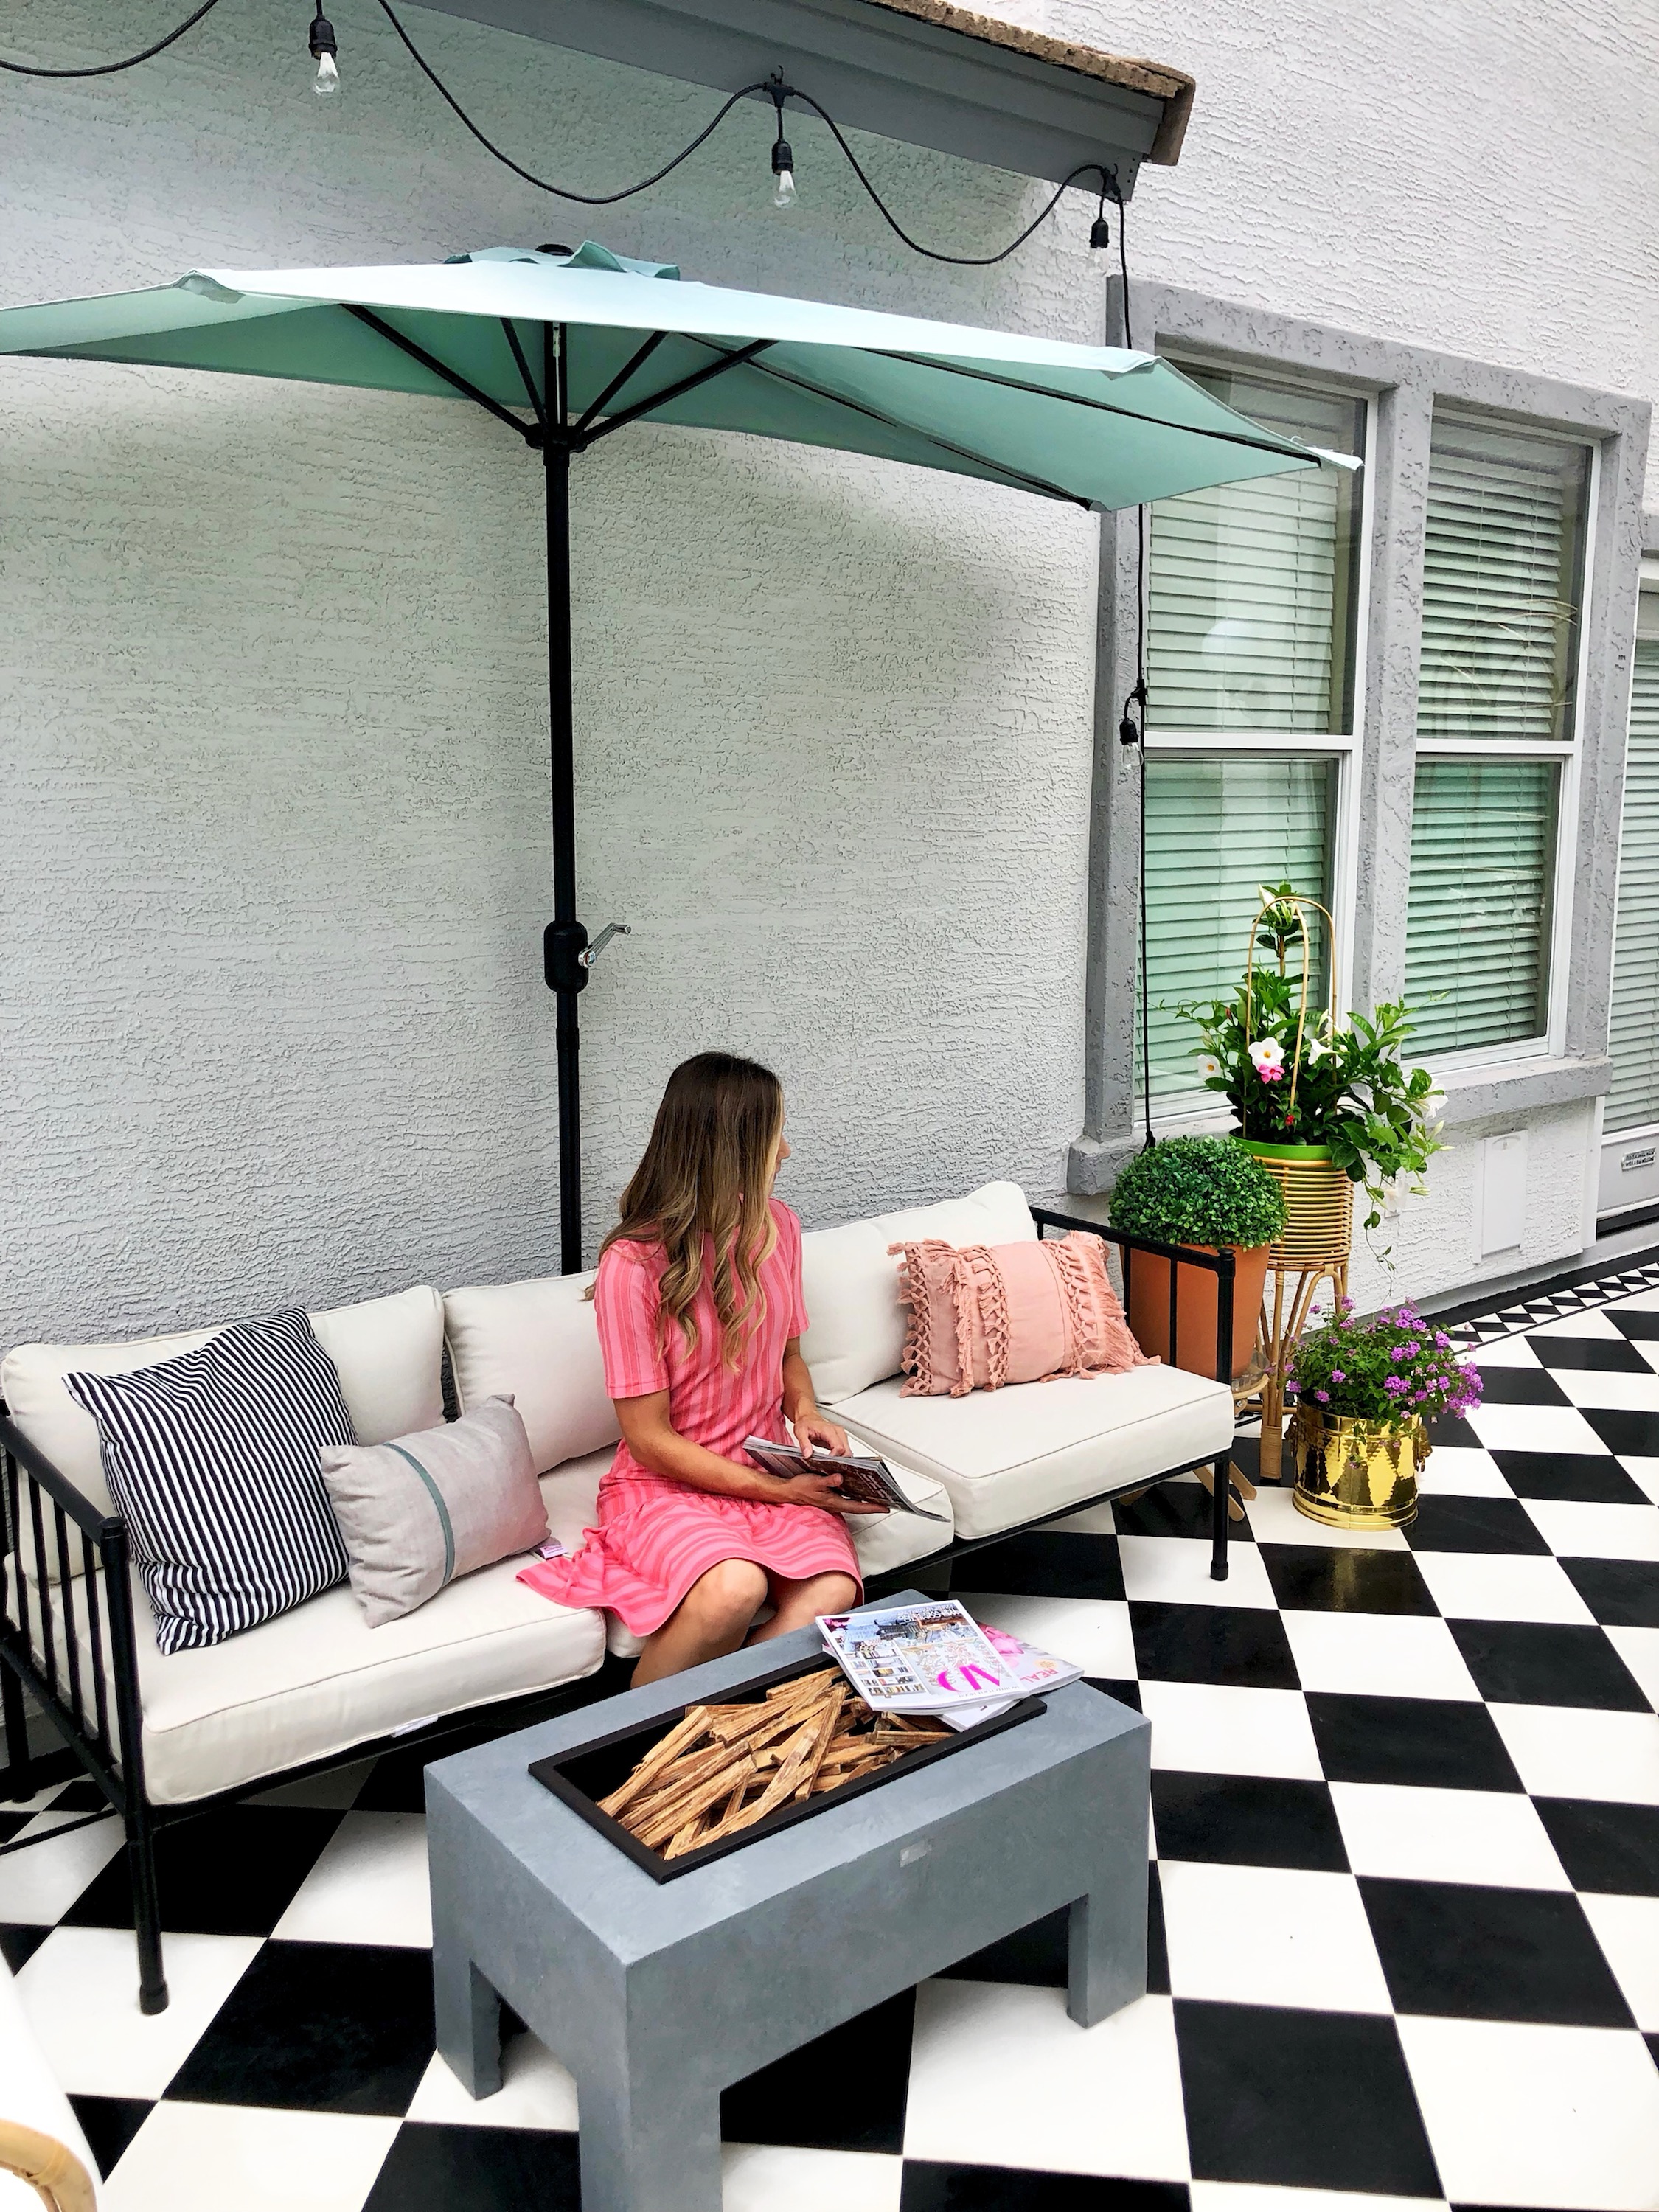 Outdoor Sofa and Umbrella on Black & White Patio 